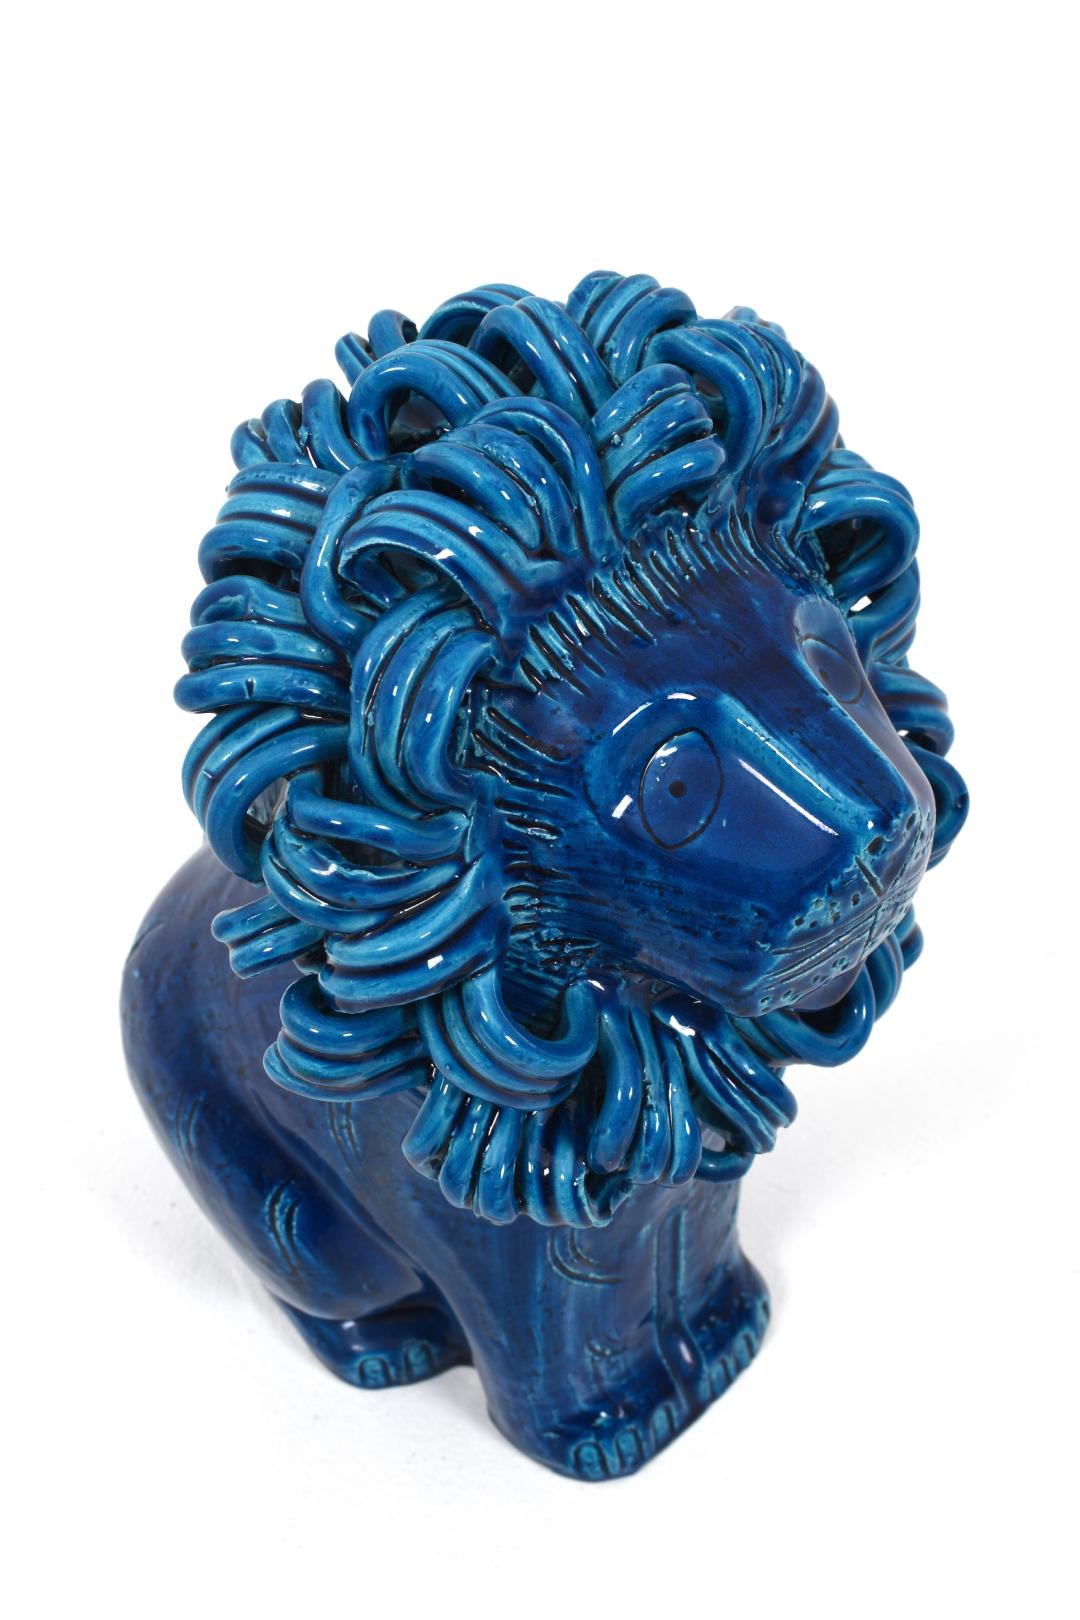 Ceramic Rimini Blue Lions by Aldo Londi for Bitossi, Italy, Set of 2